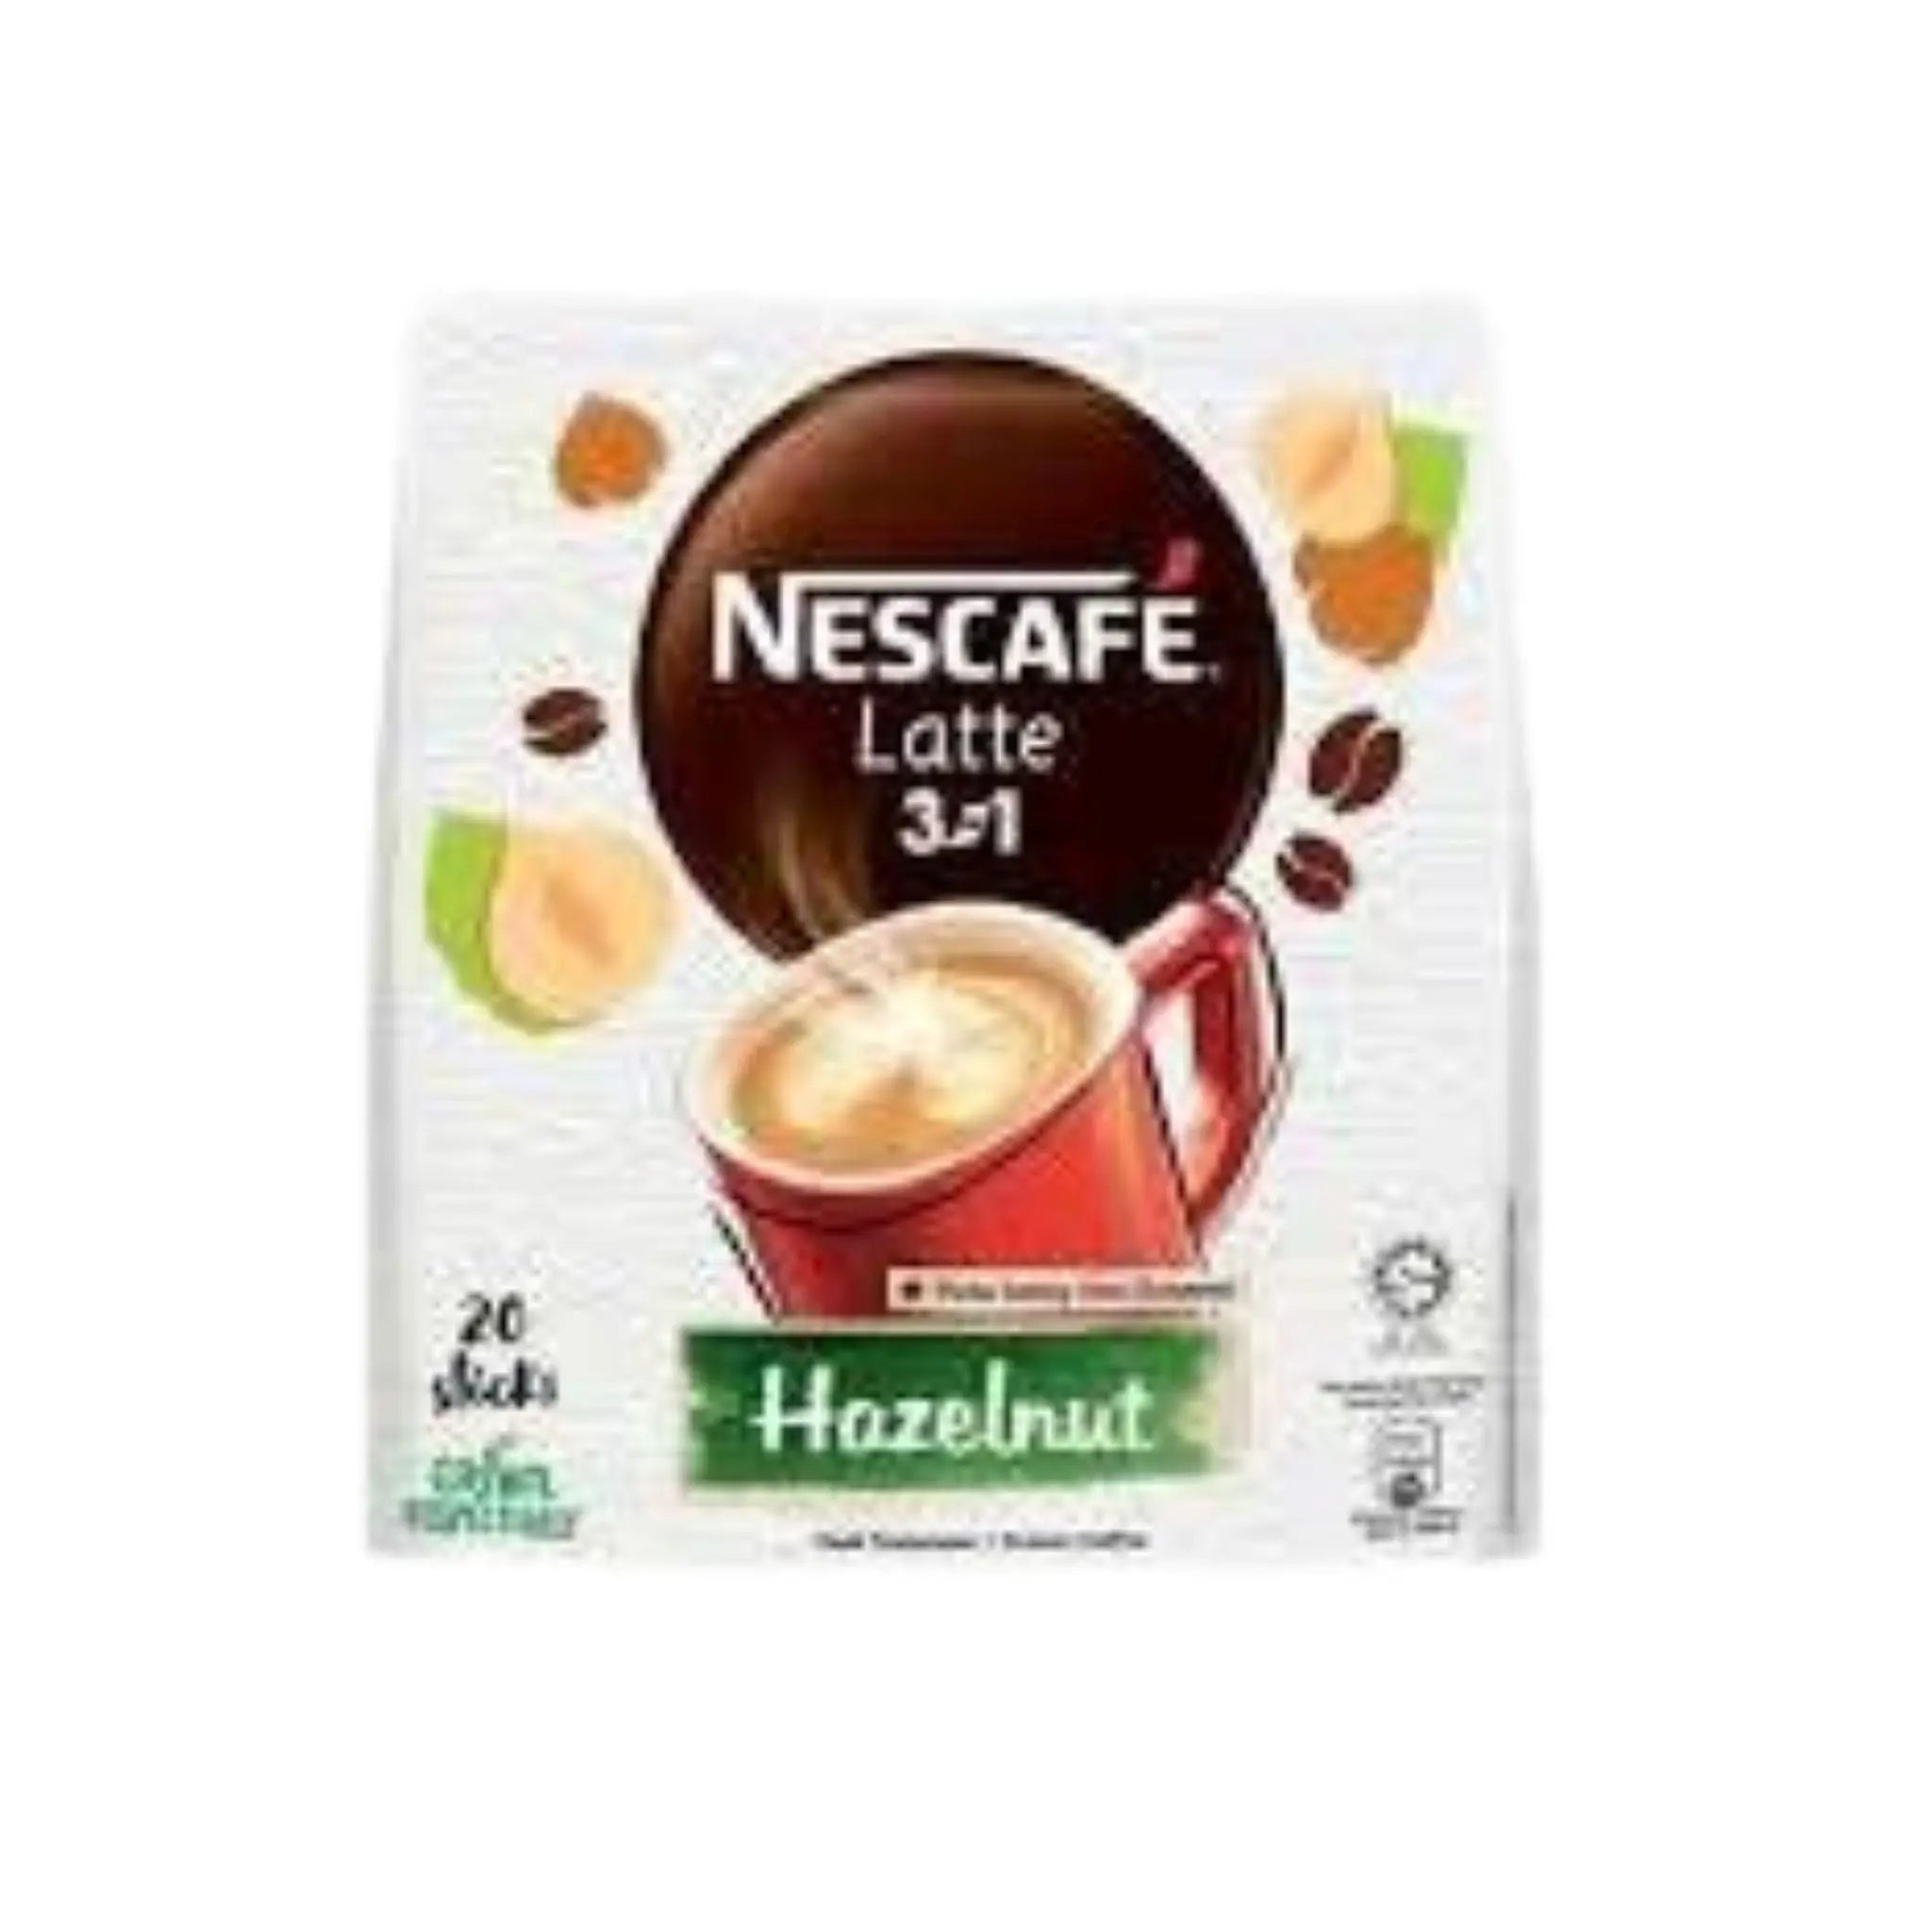 Nescafe 3in1 Latte Hazelnut - 24x20x24g (1 carton) - Marino.AE